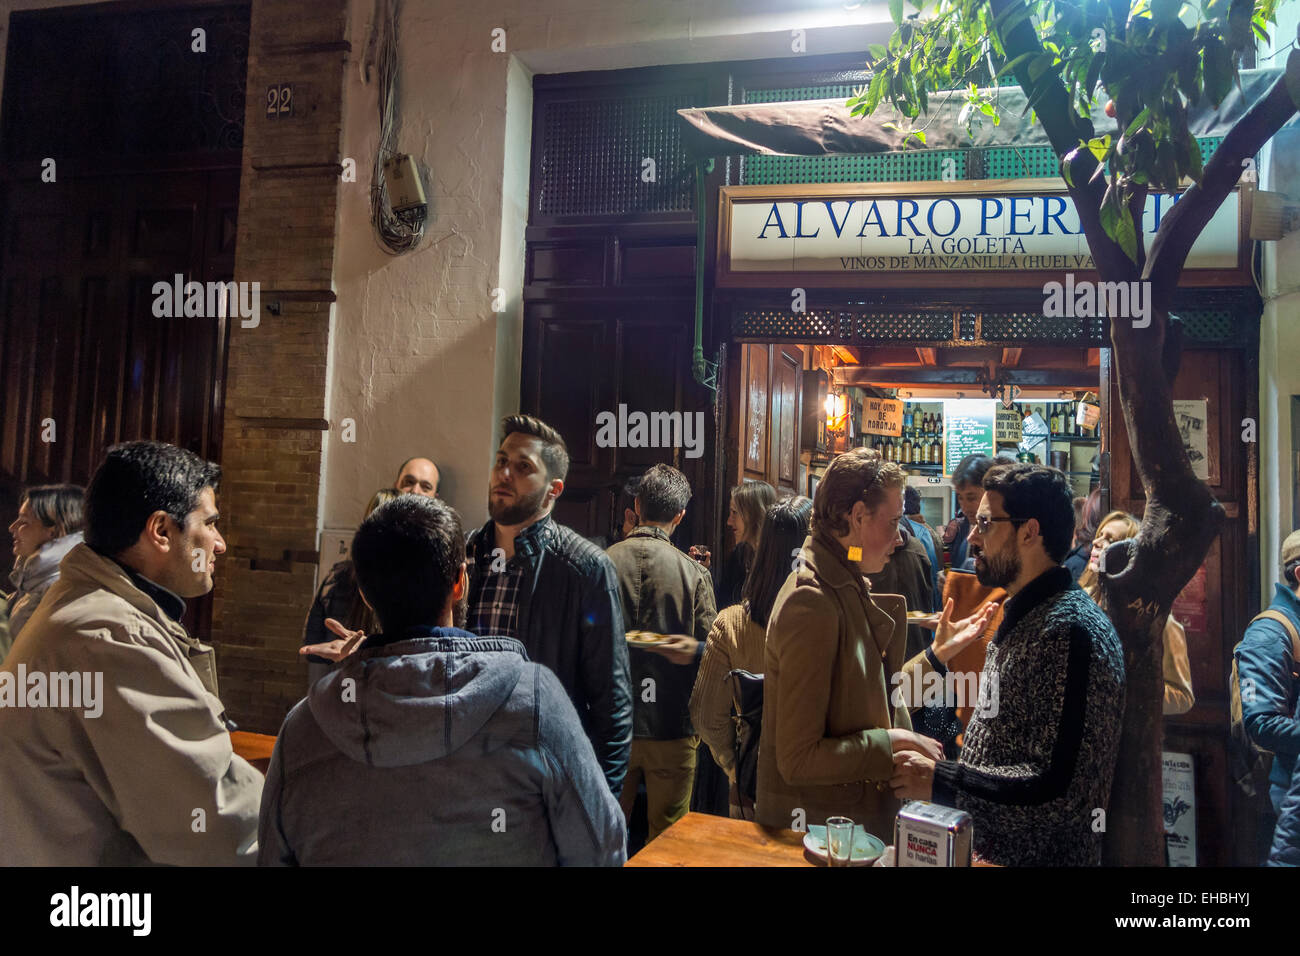 Tapas Restaurant Bar Alvaro Peregil in Seville, Sevilla, Spain with a hipster crowd standing at outside table.Aka La Goleta. Stock Photo